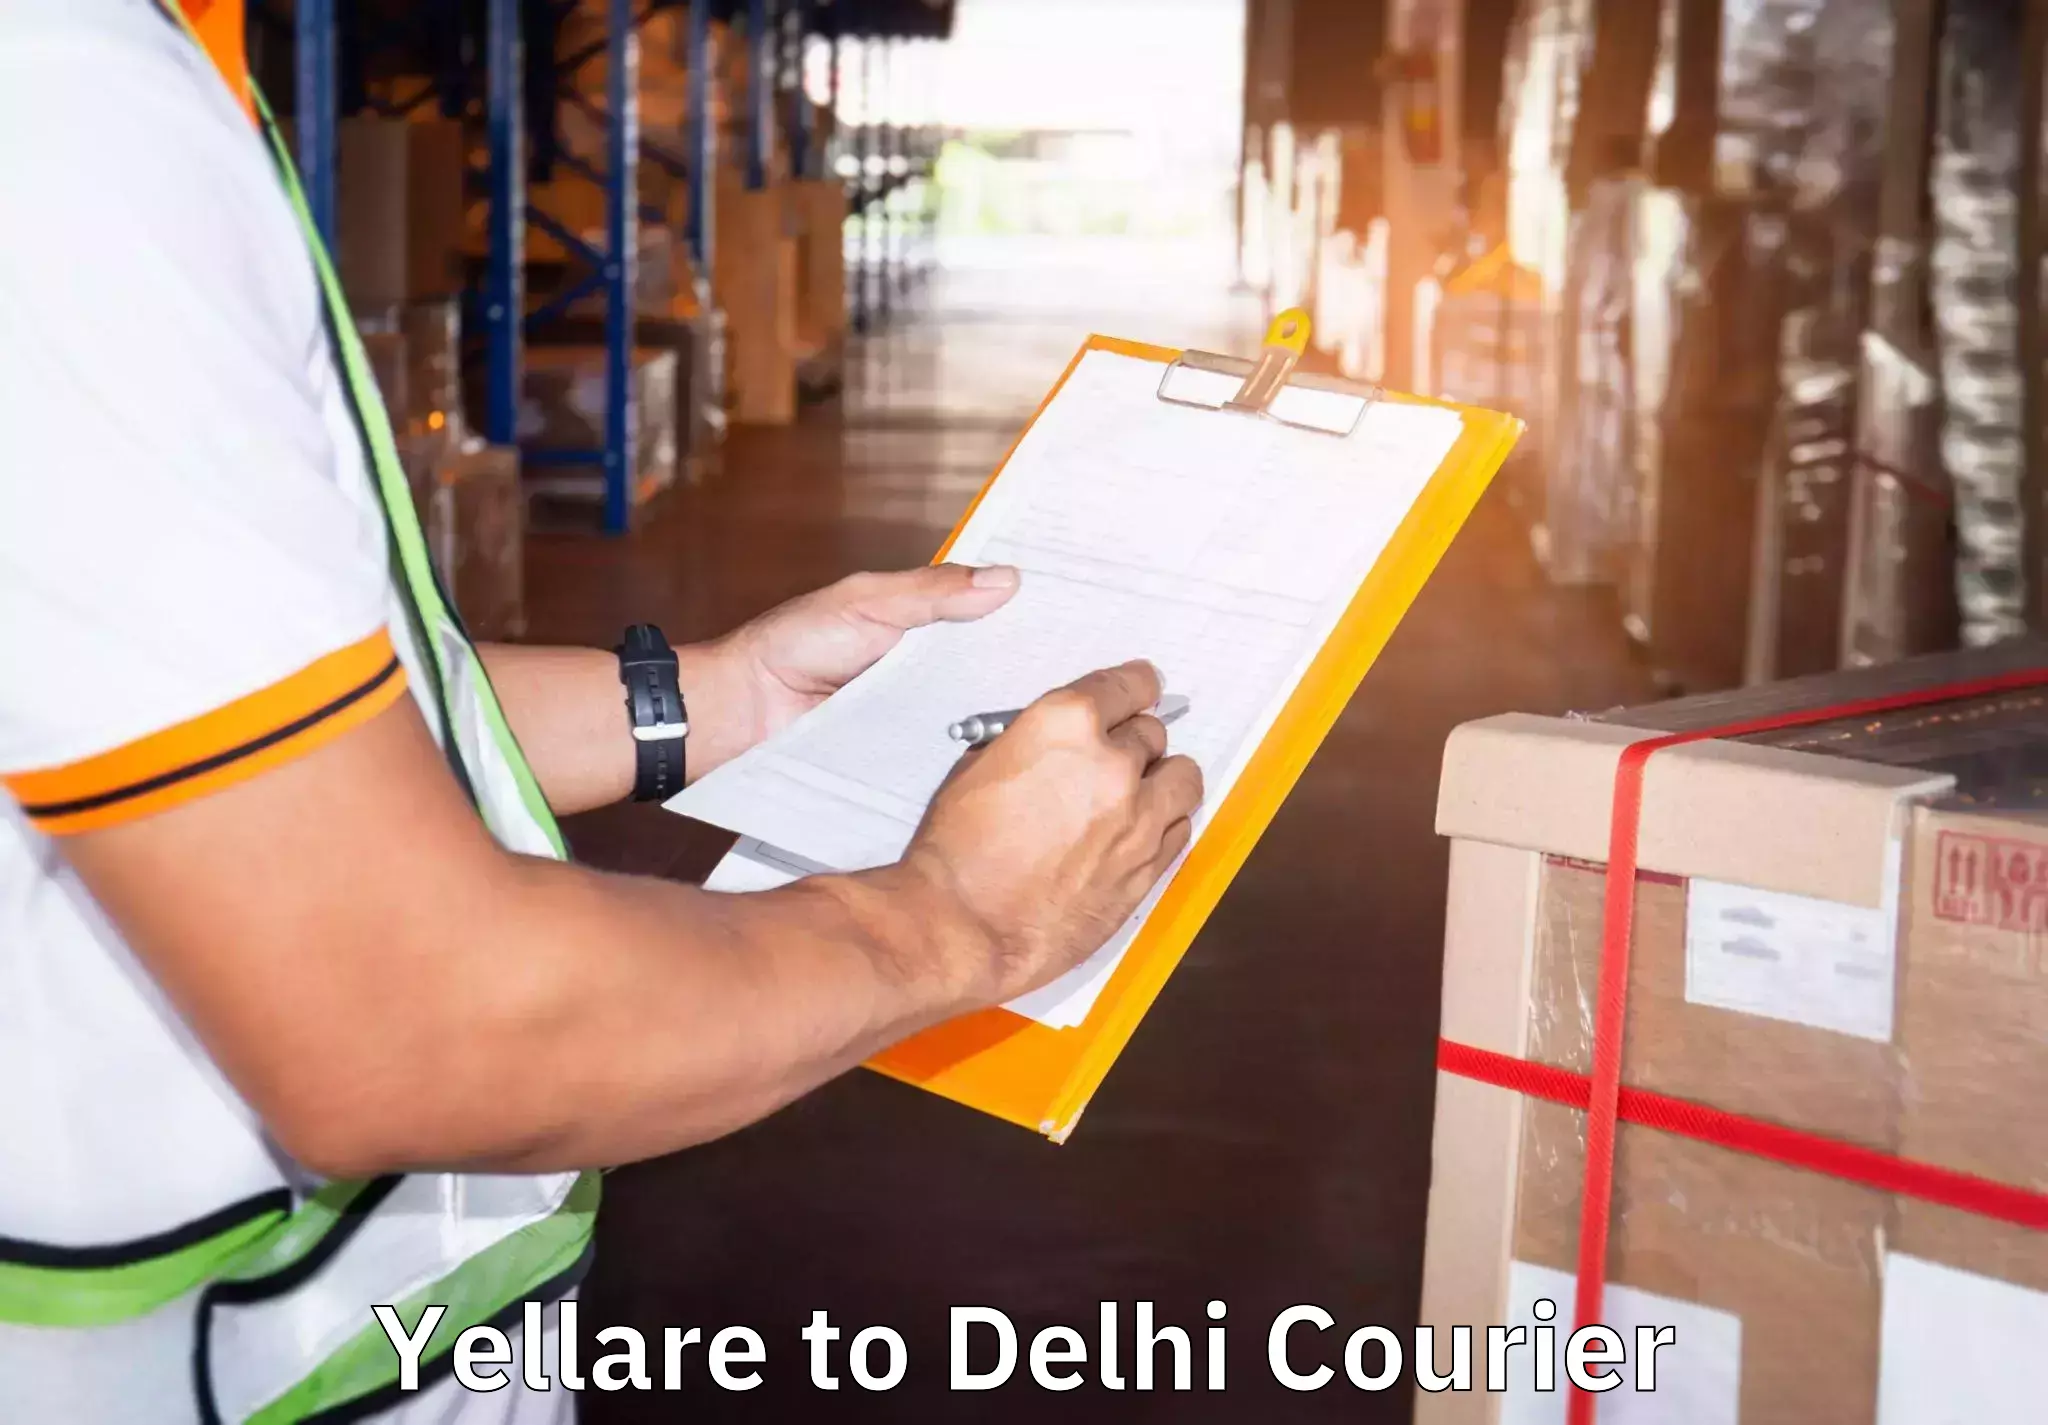 Professional furniture movers Yellare to Delhi